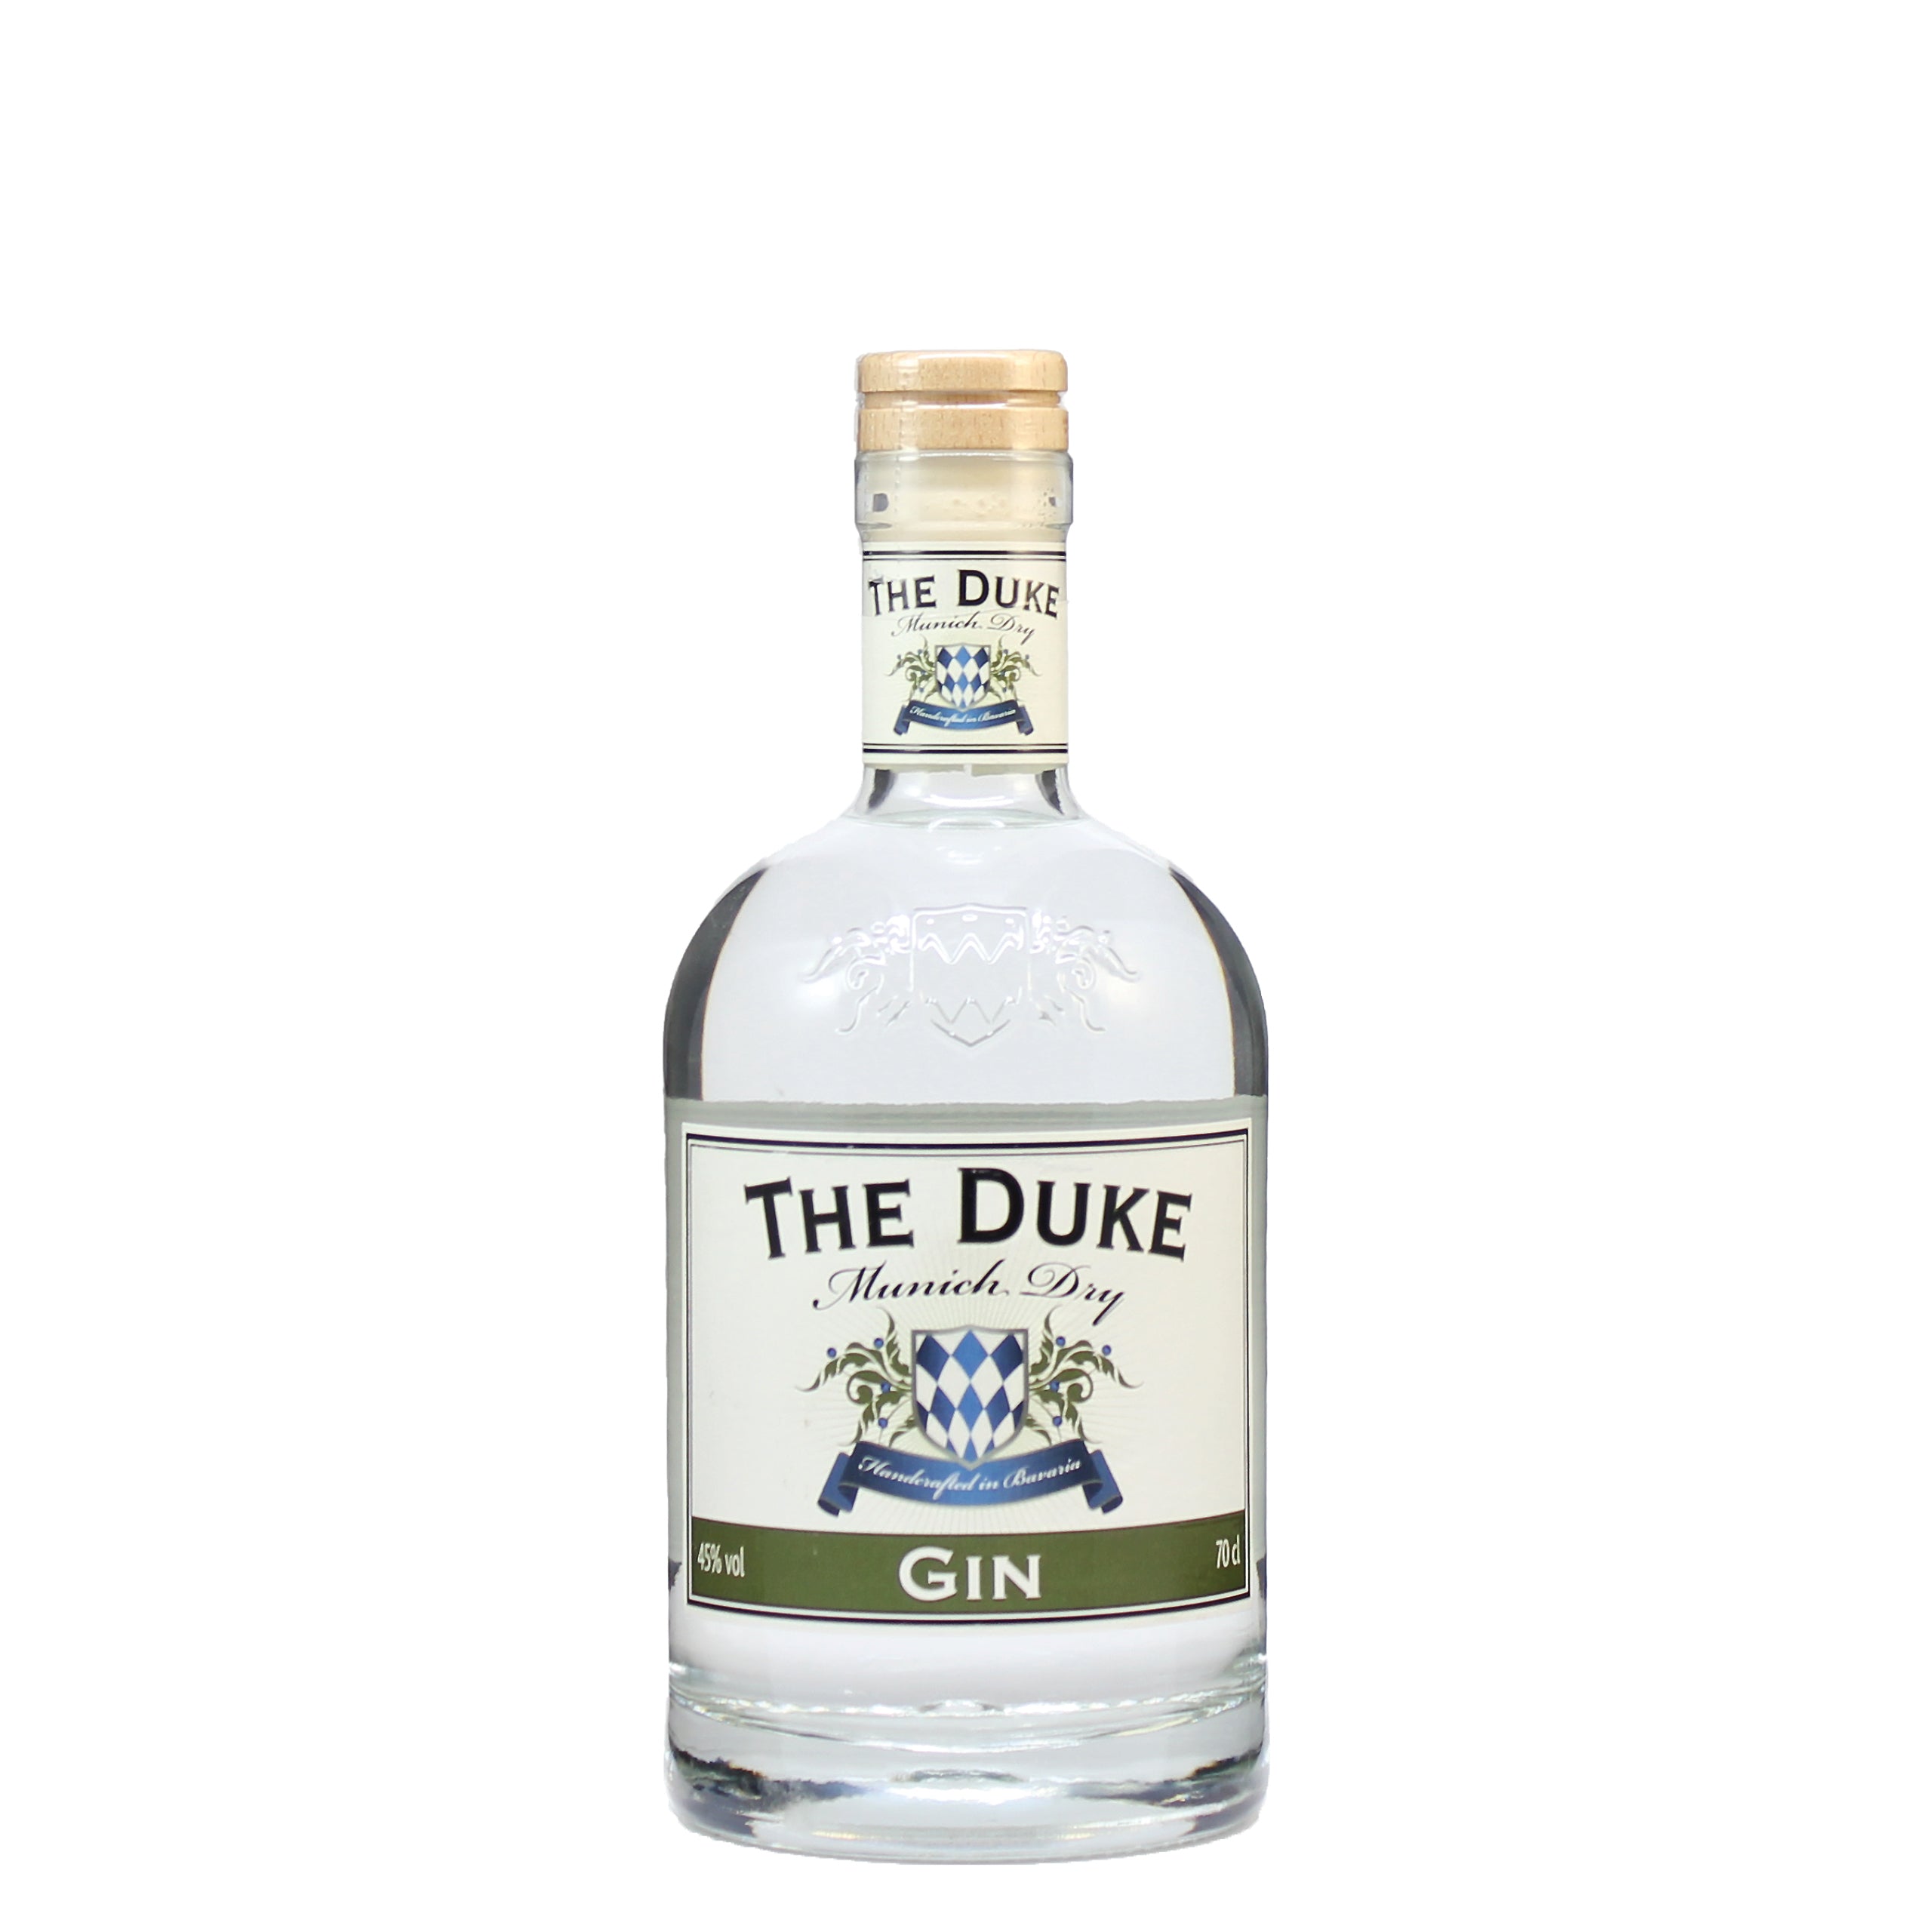 The Duke Munich Dry Gin | Gin